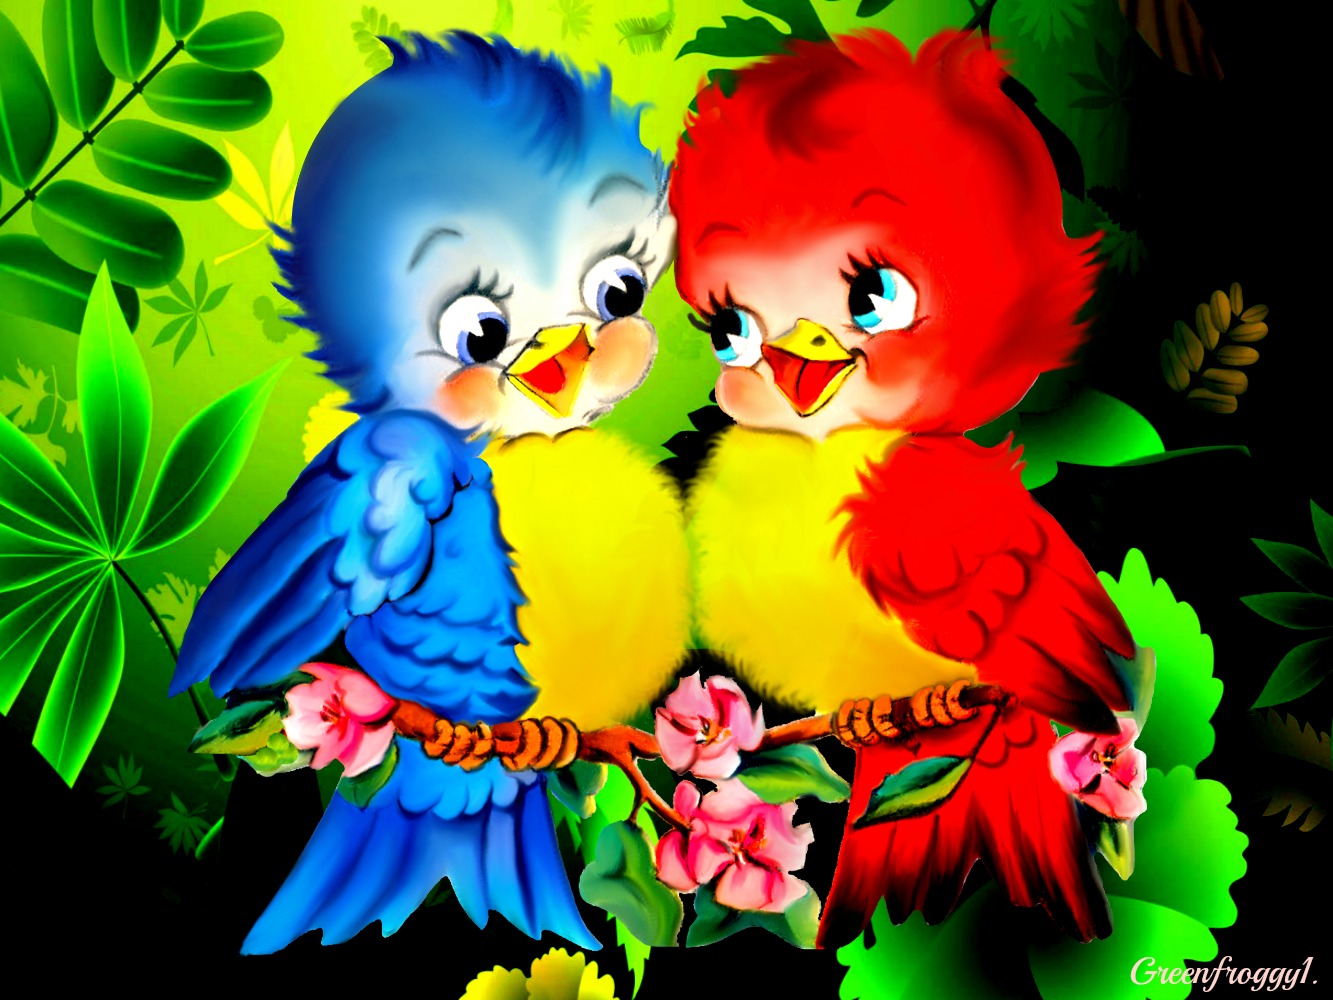 LOVE BIRDS Art - ID: 63921
